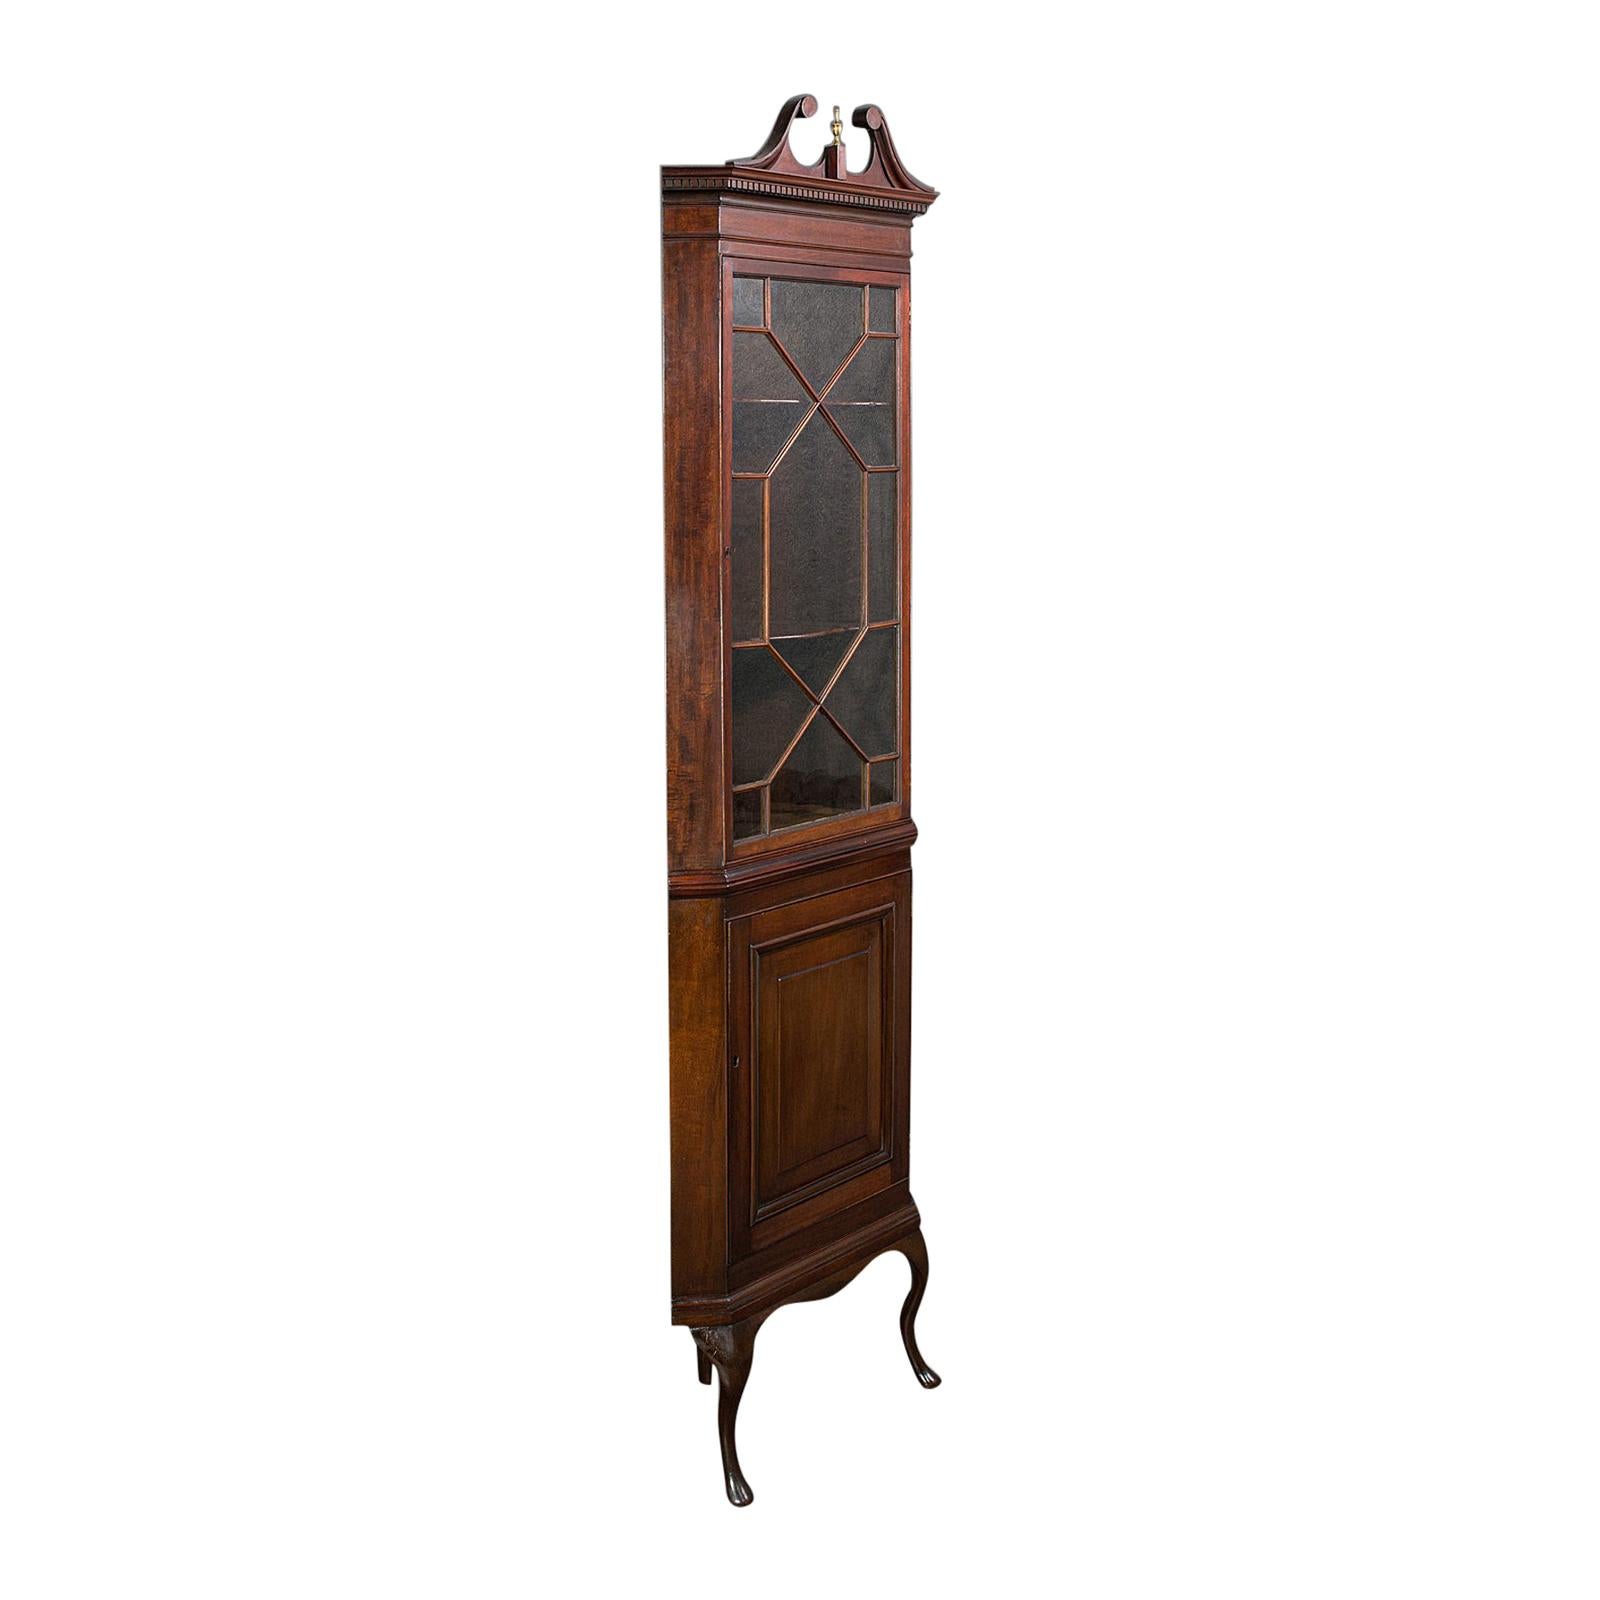 Rare, Tall Antique Corner Cabinet, Mahogany, Cupboard, Georgian Revival